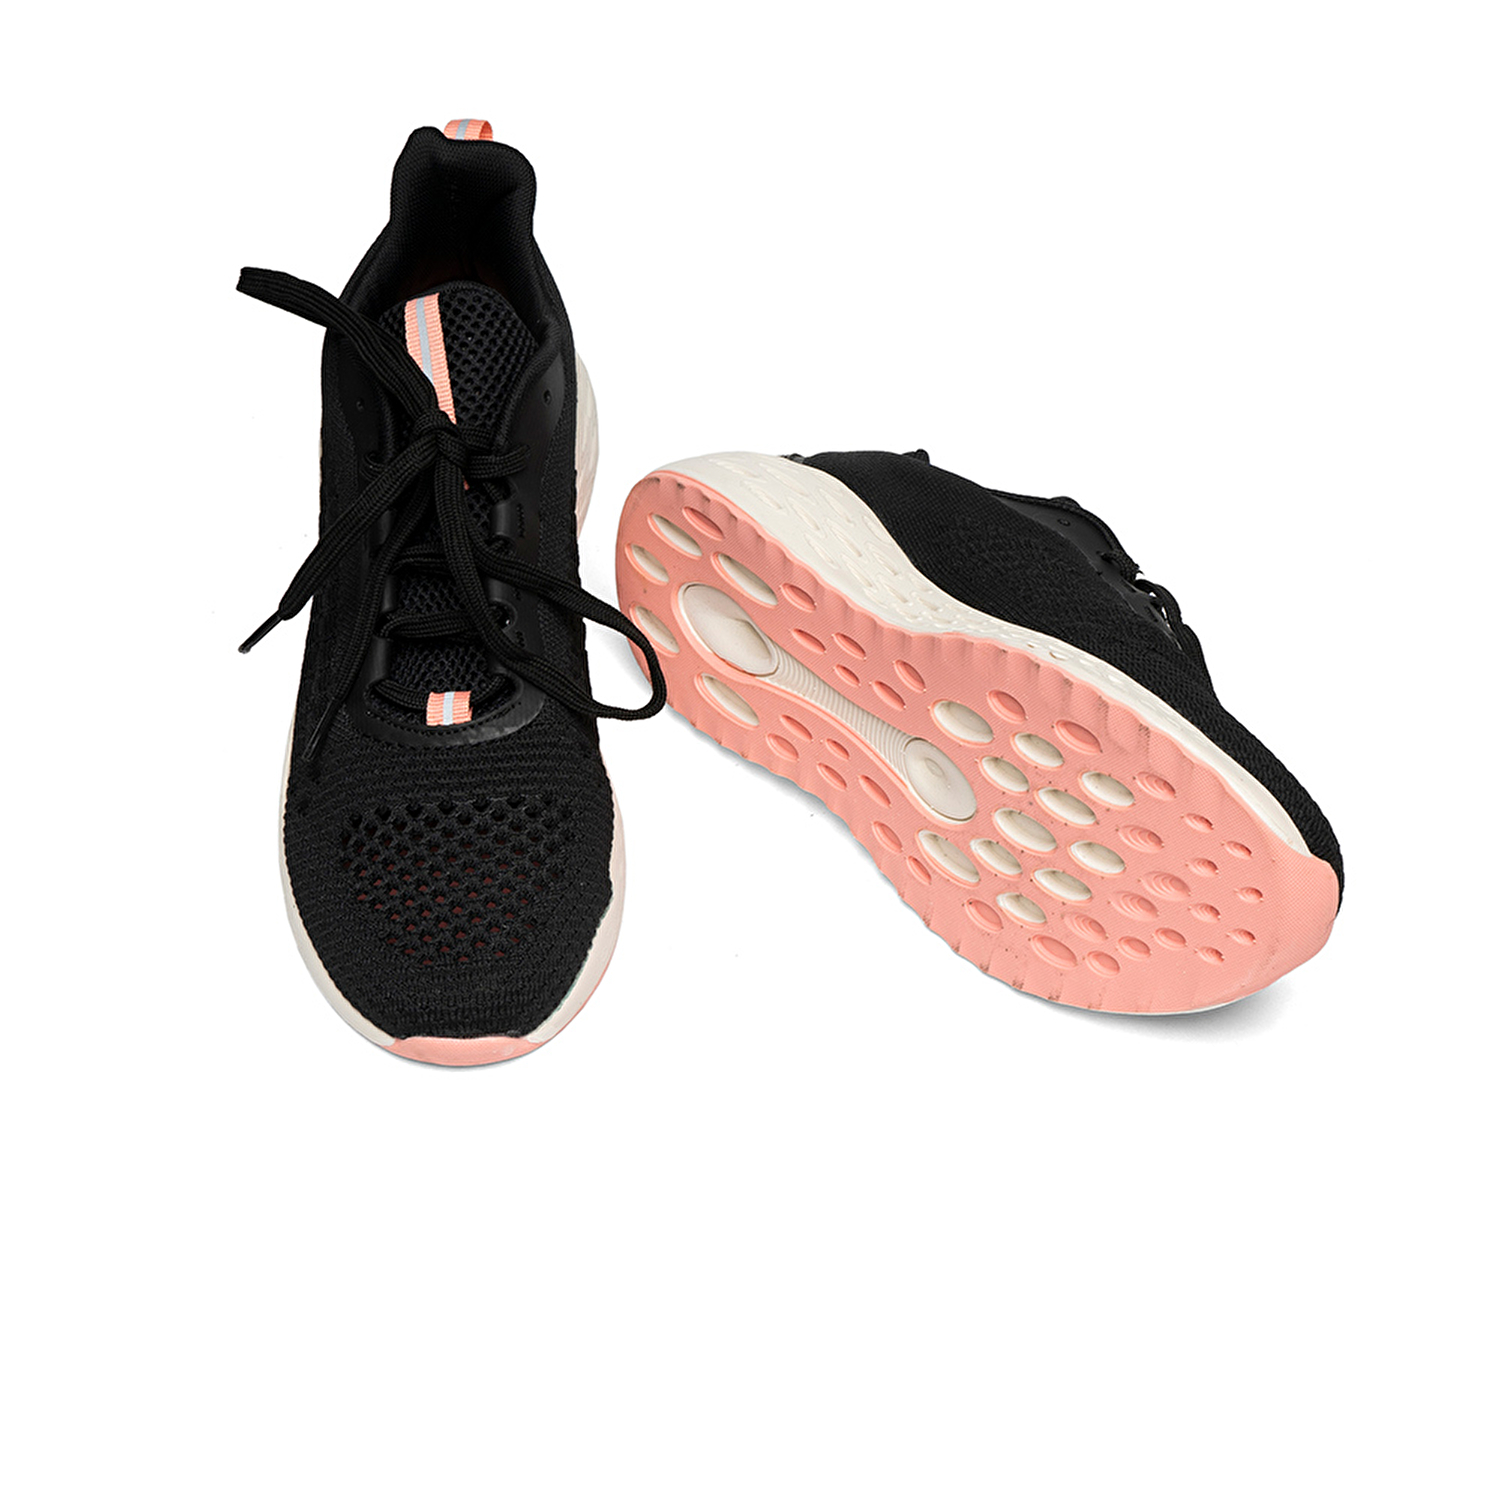 Kadın Siyah Pudra Hakiki Deri Spor Ayakkabı 2Y2SA57408-5